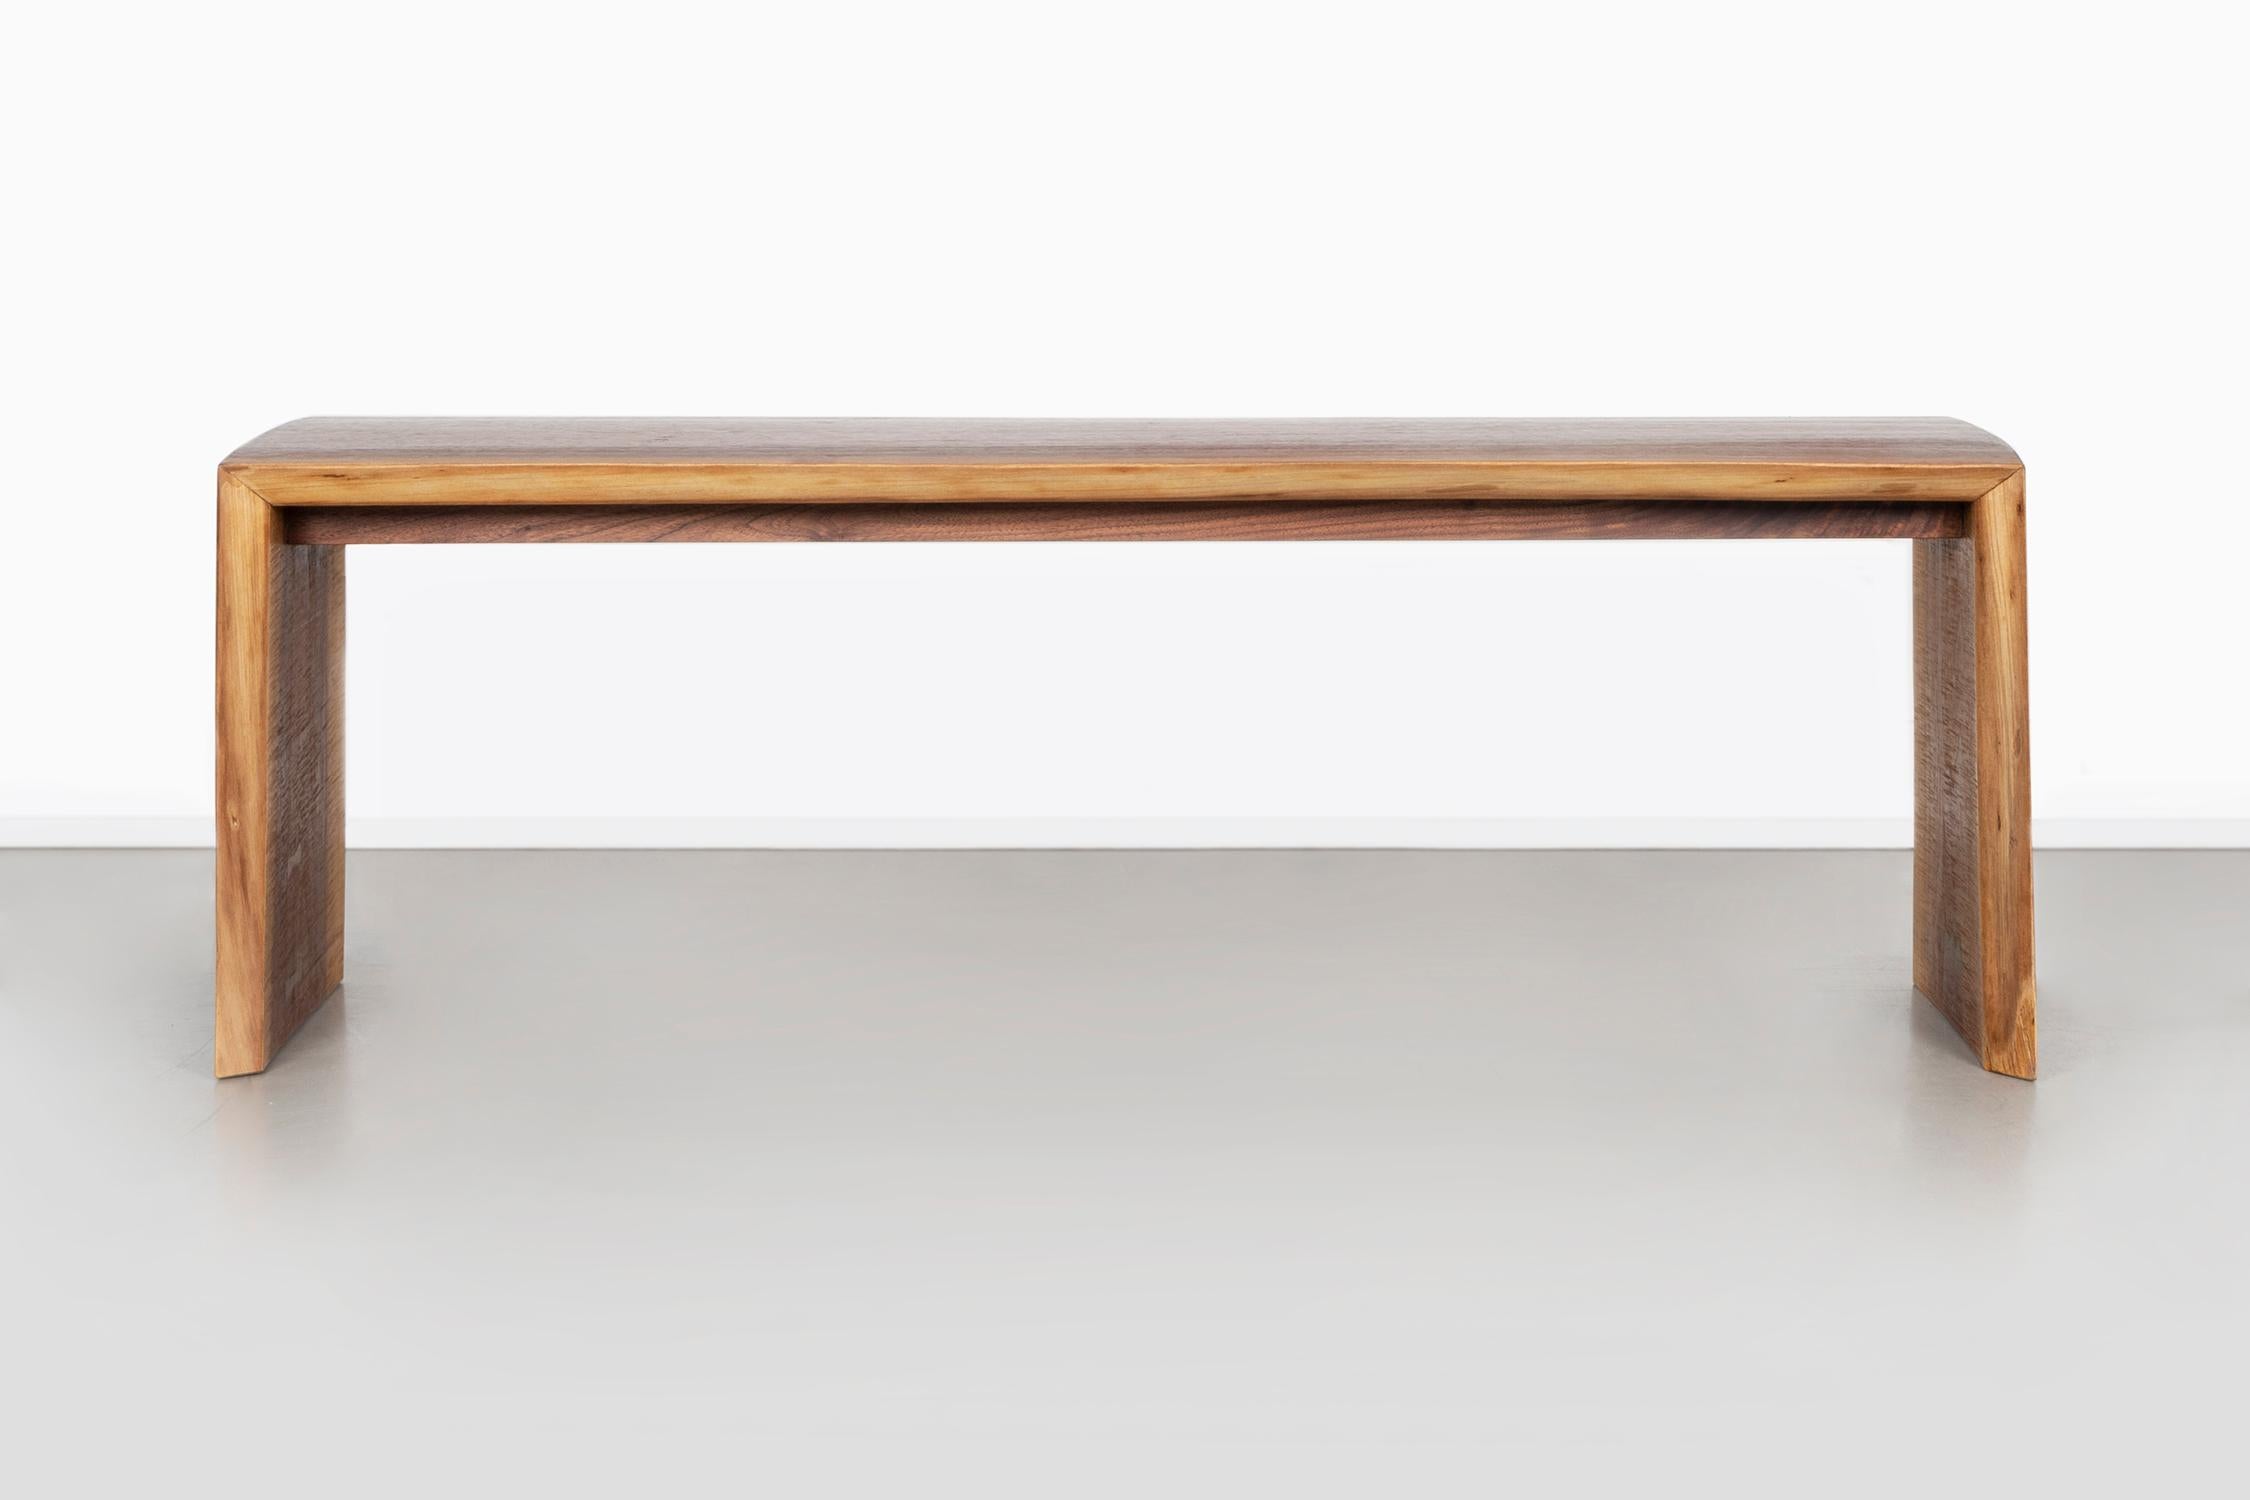 Bench

Designed by Seth Keller

USA, 2020

Walnut

Size: 16 ?” H x 48” W x 14” D.

           